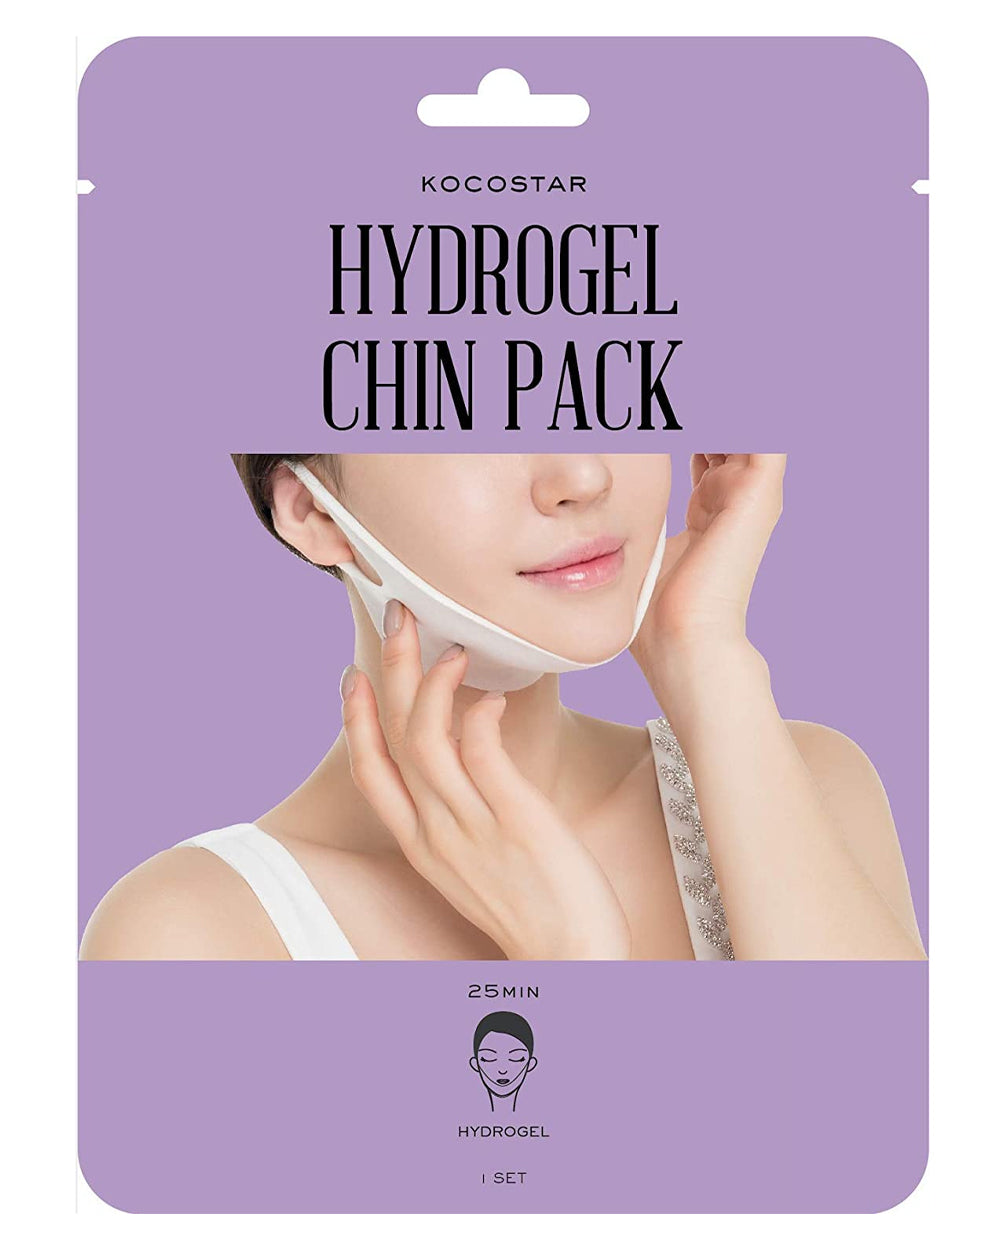 Kocostar Hydrogel Chin Pack